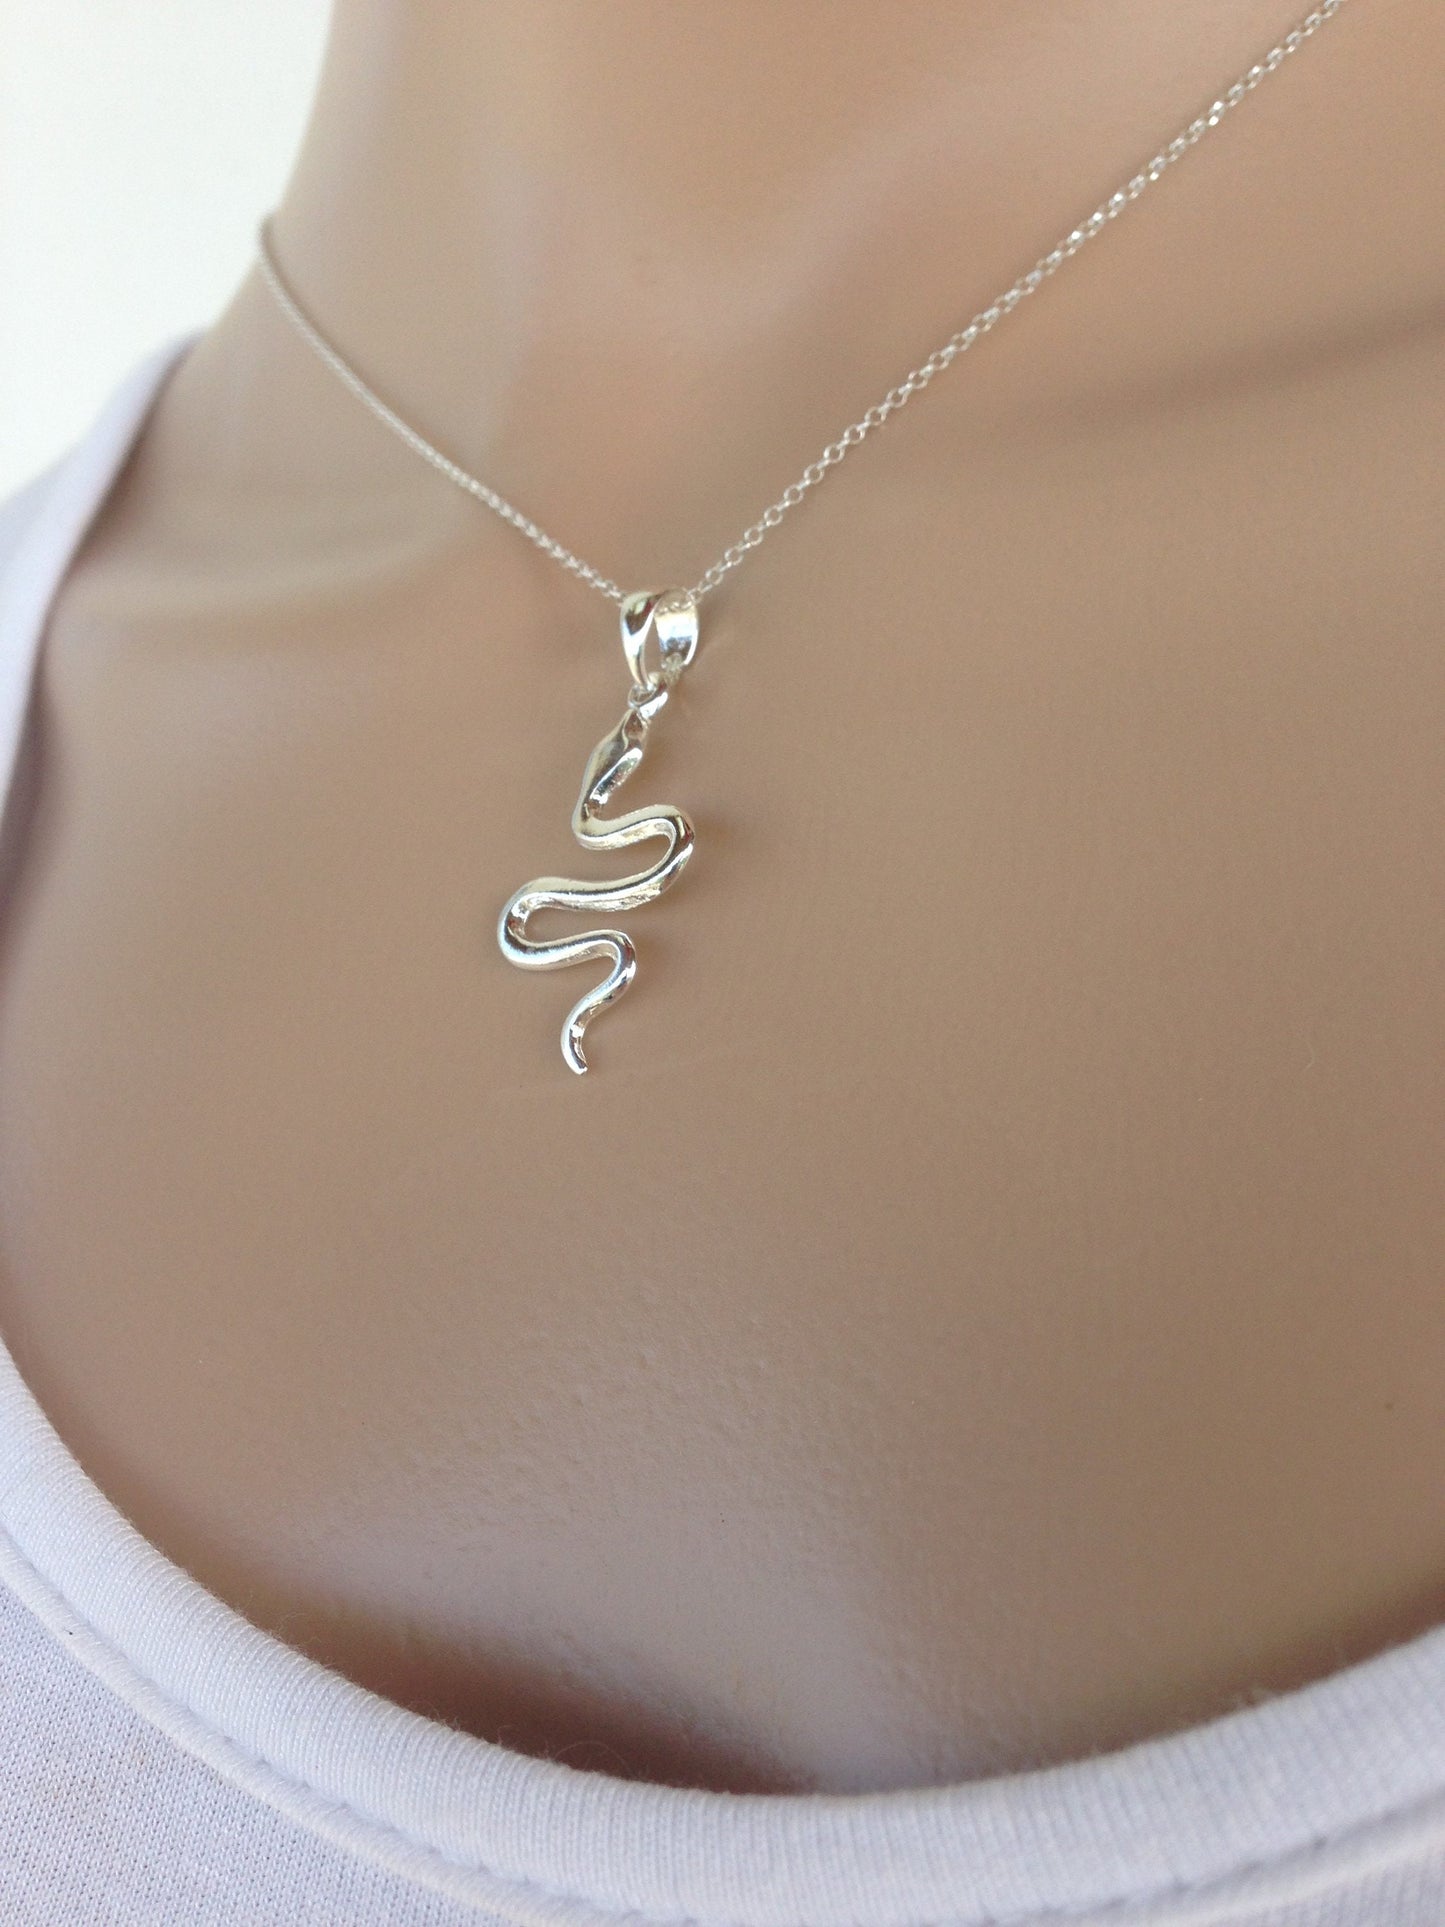 Women's silver snake pendant necklace